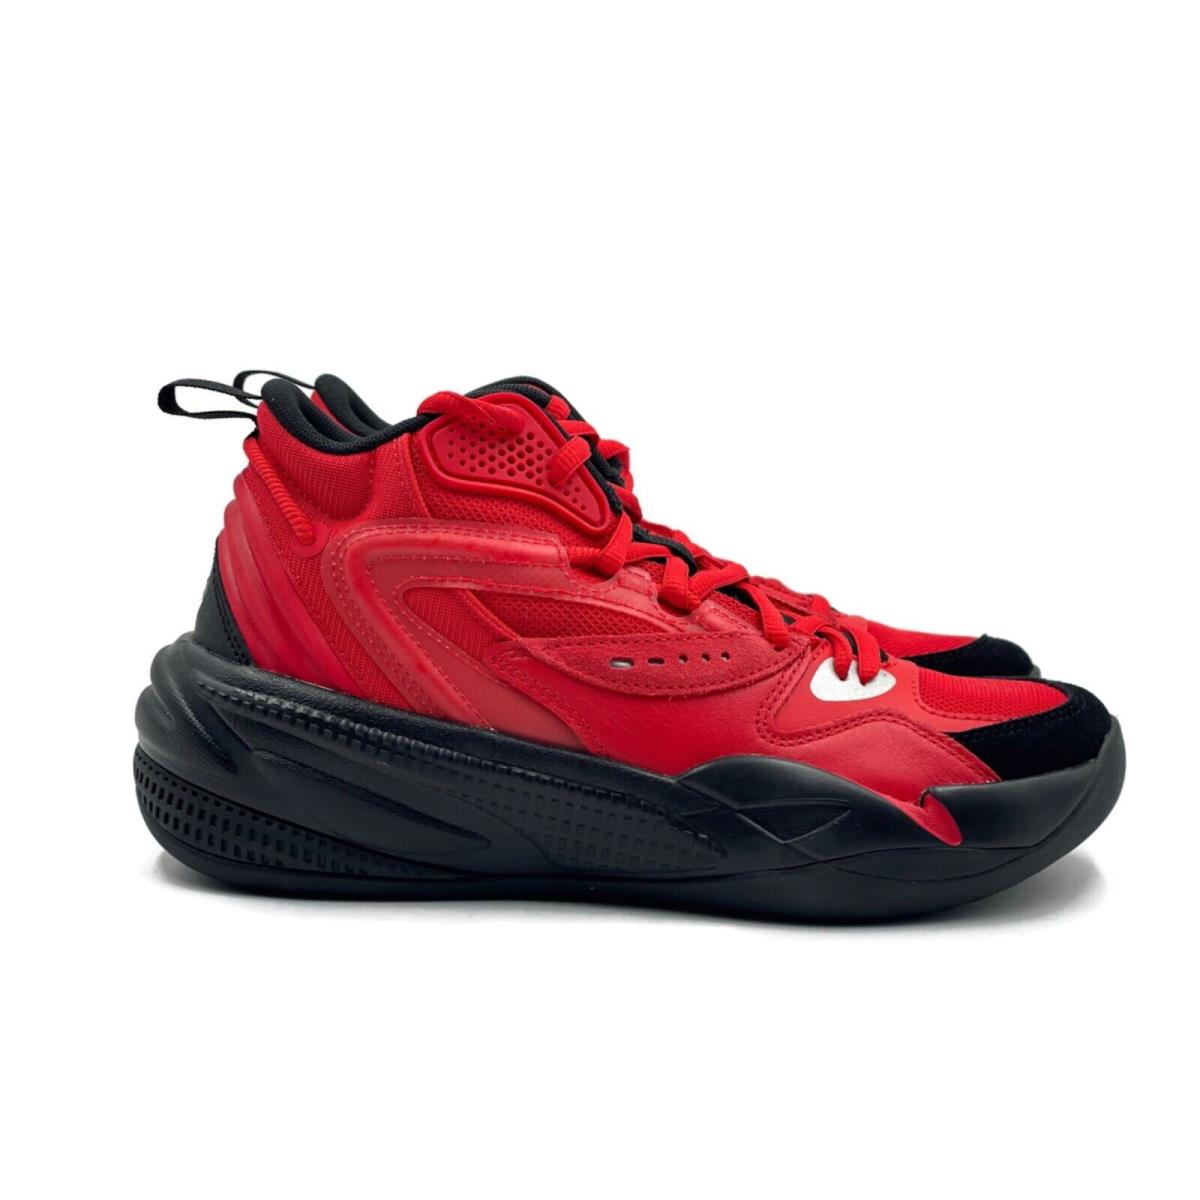 Puma Rs-dreamer Mid JR Big Kid Basketball Shoe Red Black Trainer Sneaker J Cole - Black Red White